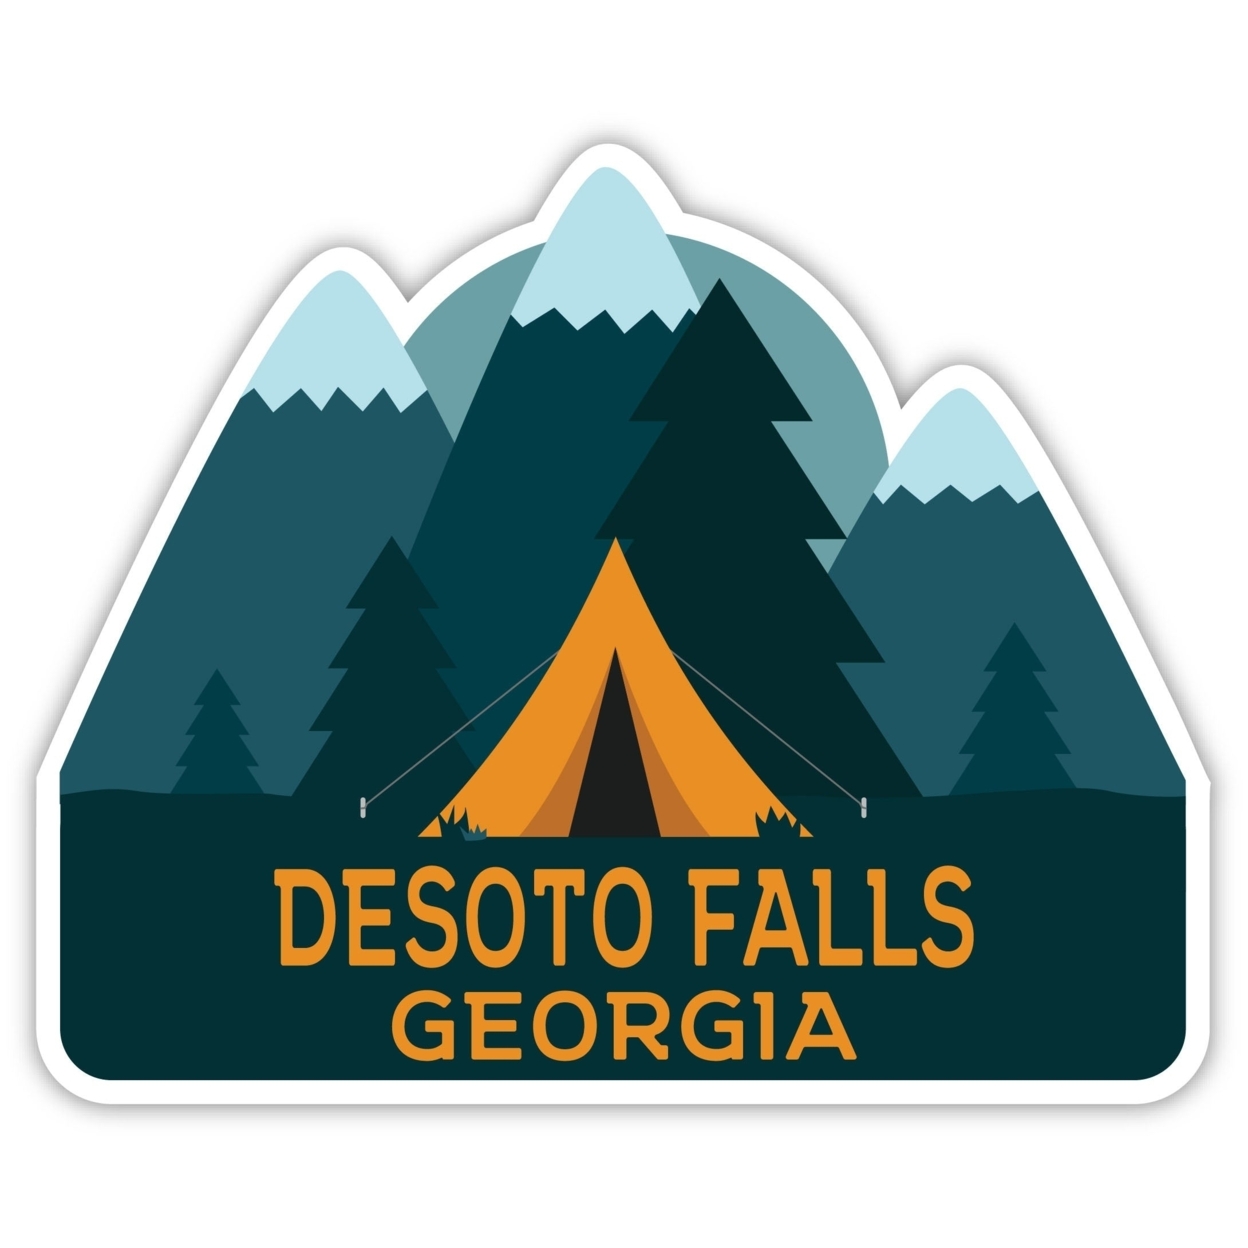 DeSoto Falls Georgia Souvenir Decorative Stickers (Choose Theme And Size) - 4-Pack, 10-Inch, Tent